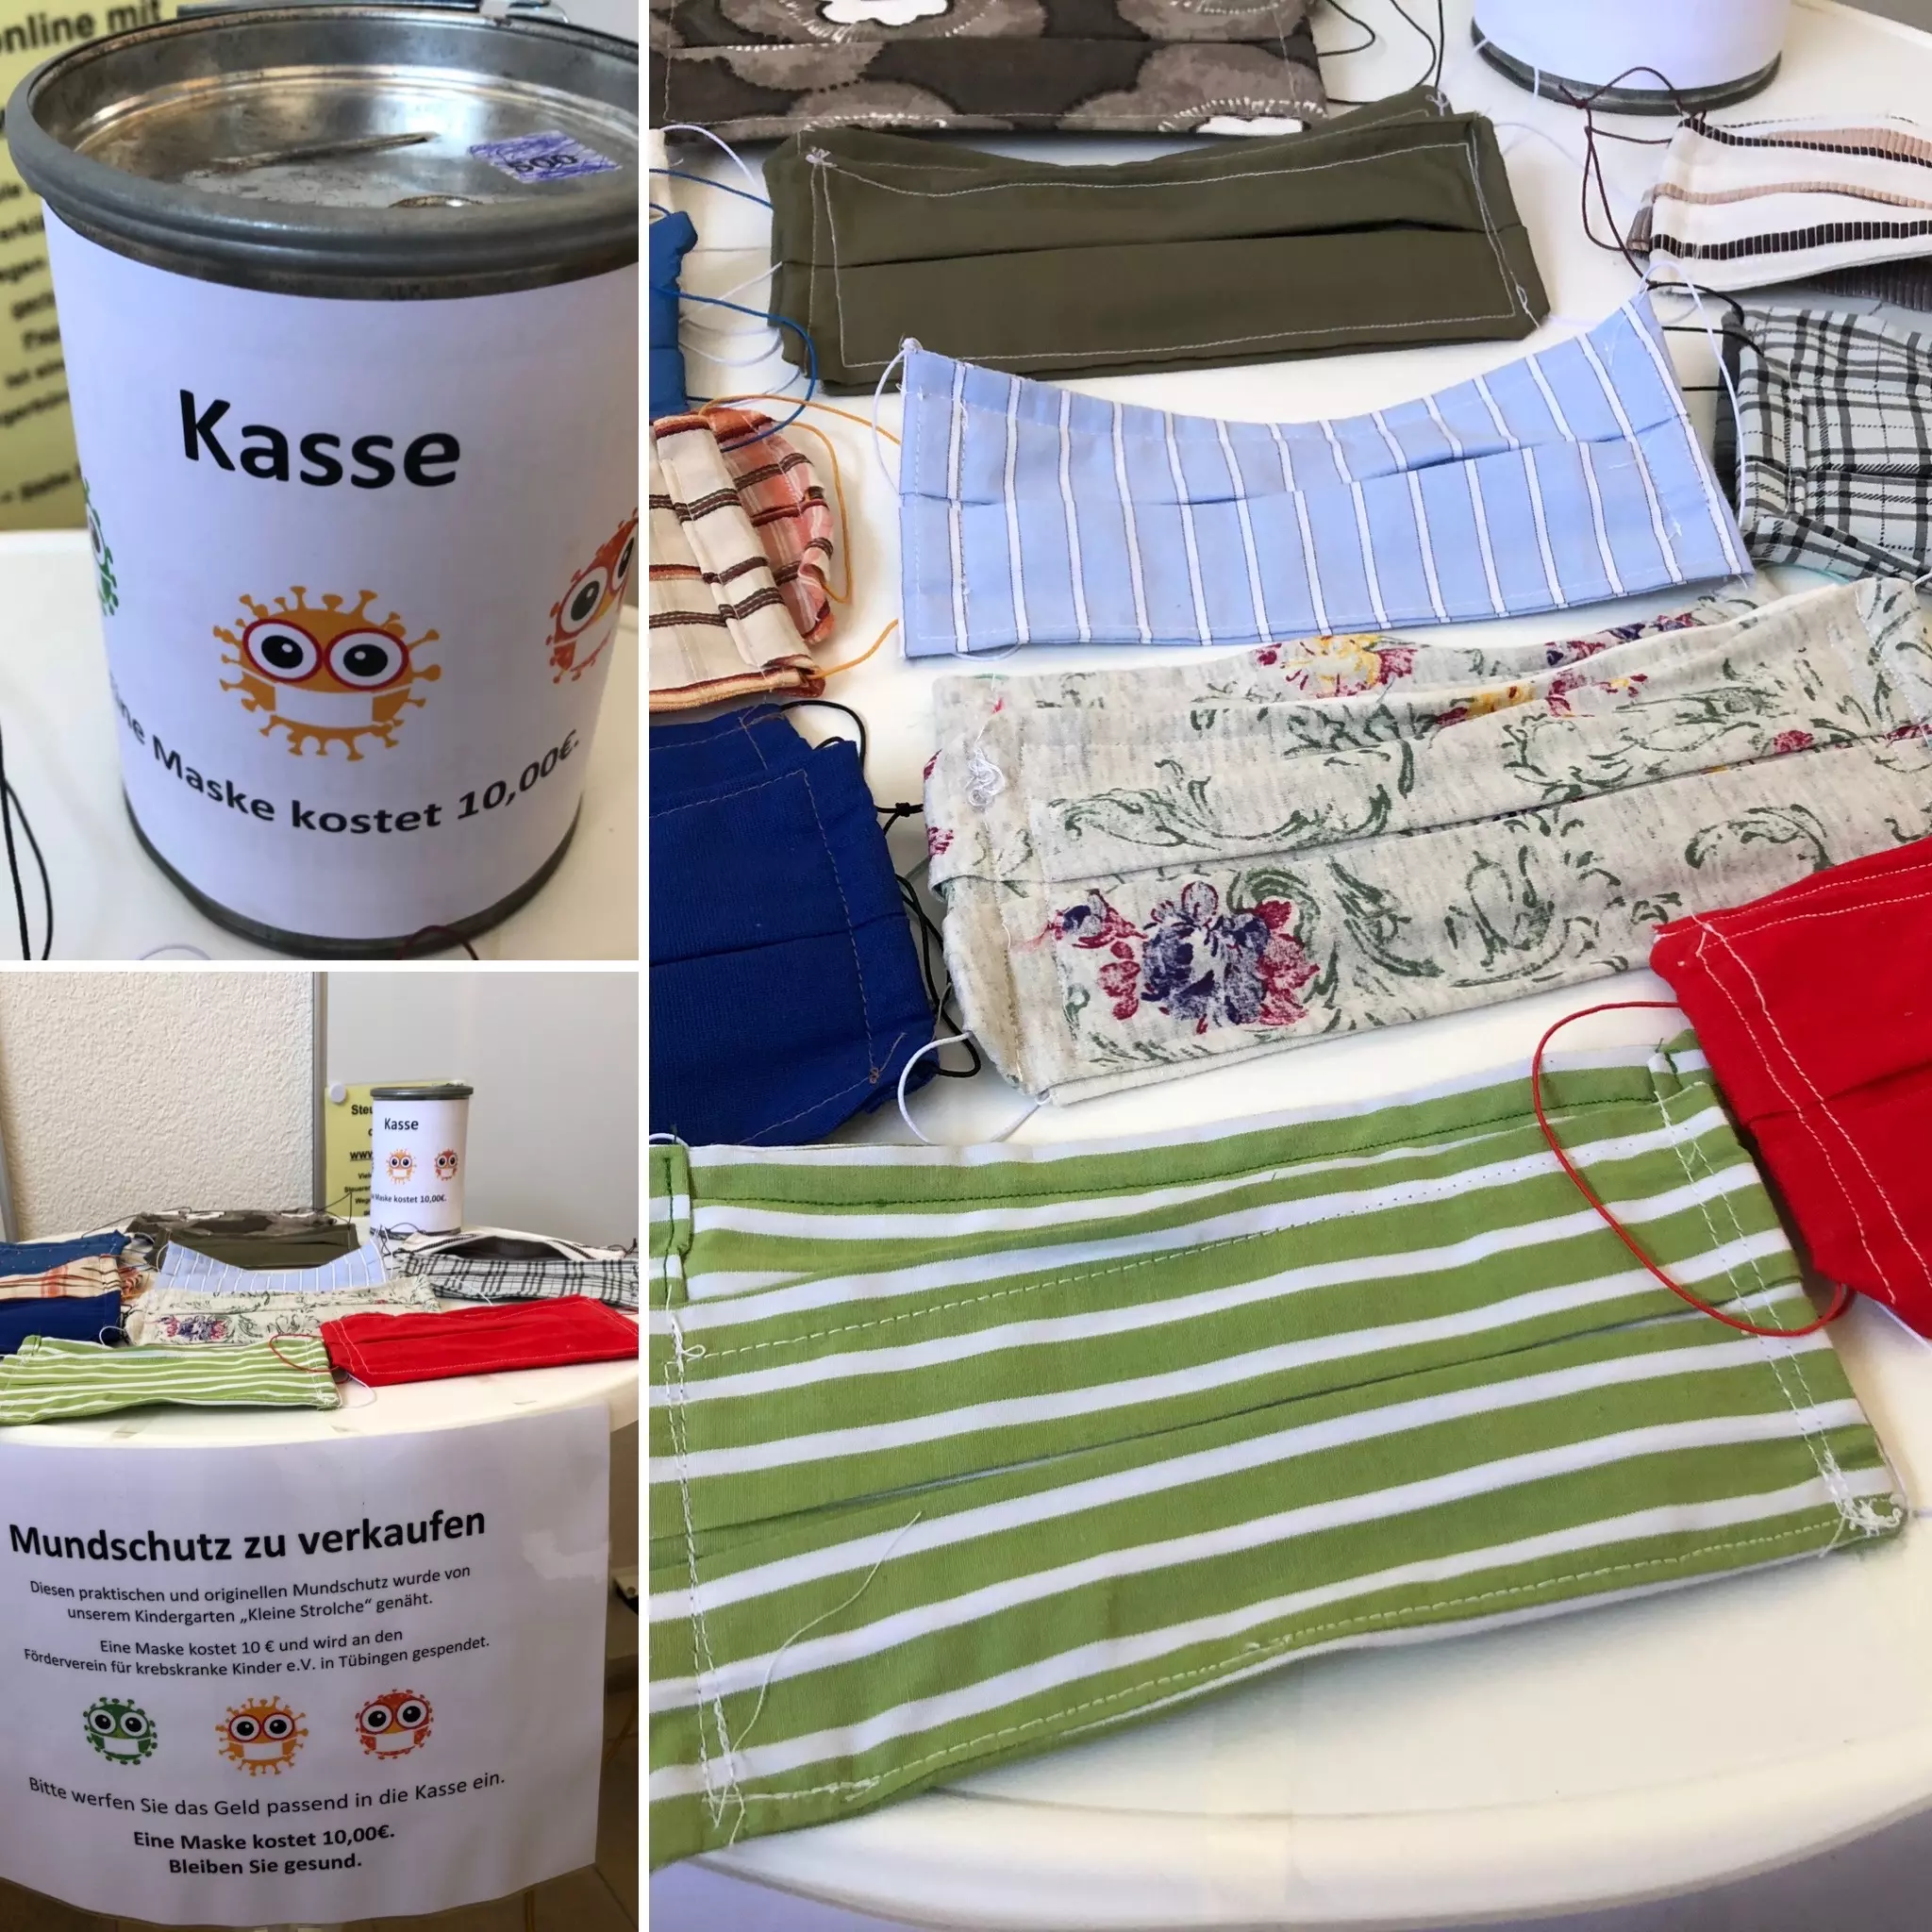 Spende an den Förderverein für krebskranke Kinder Tübingen